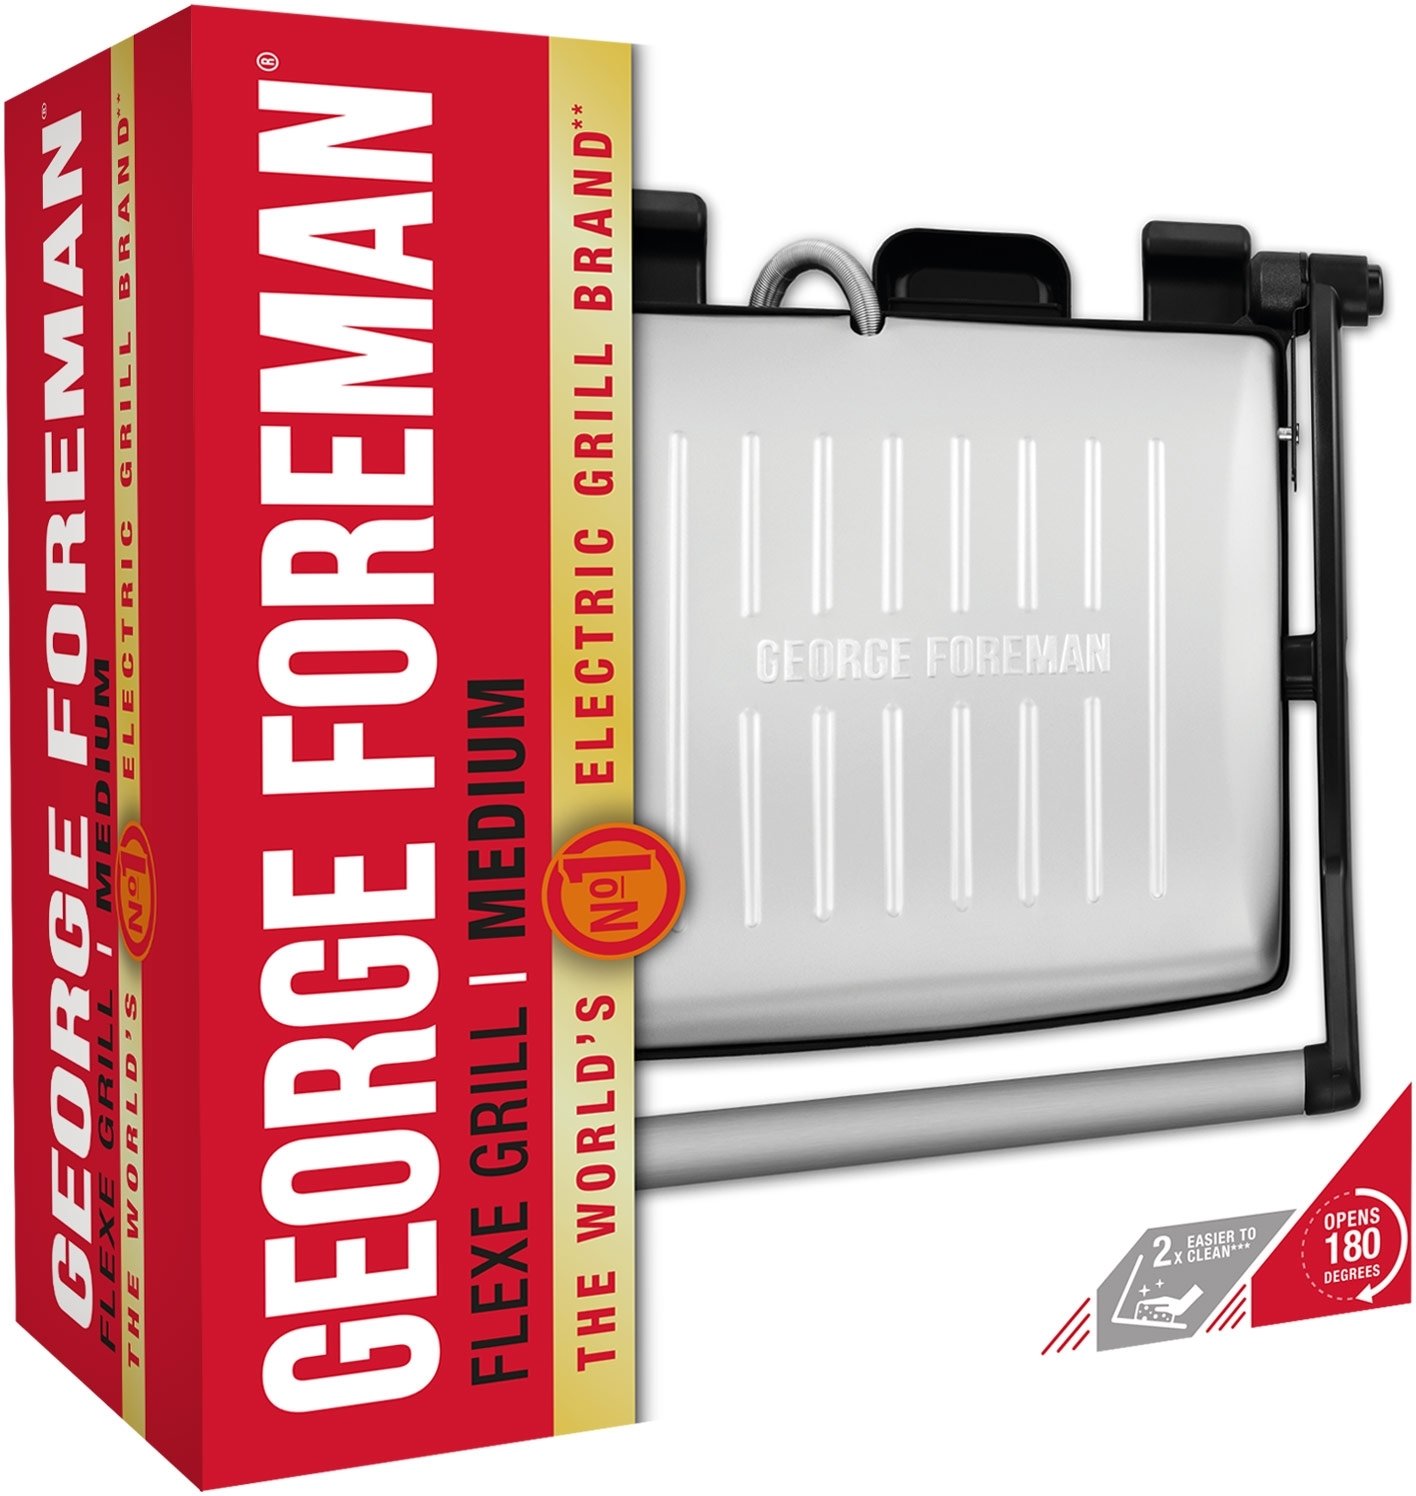 George Foreman 26250-56 Flexe Grill в магазине в Киеве - фото 10